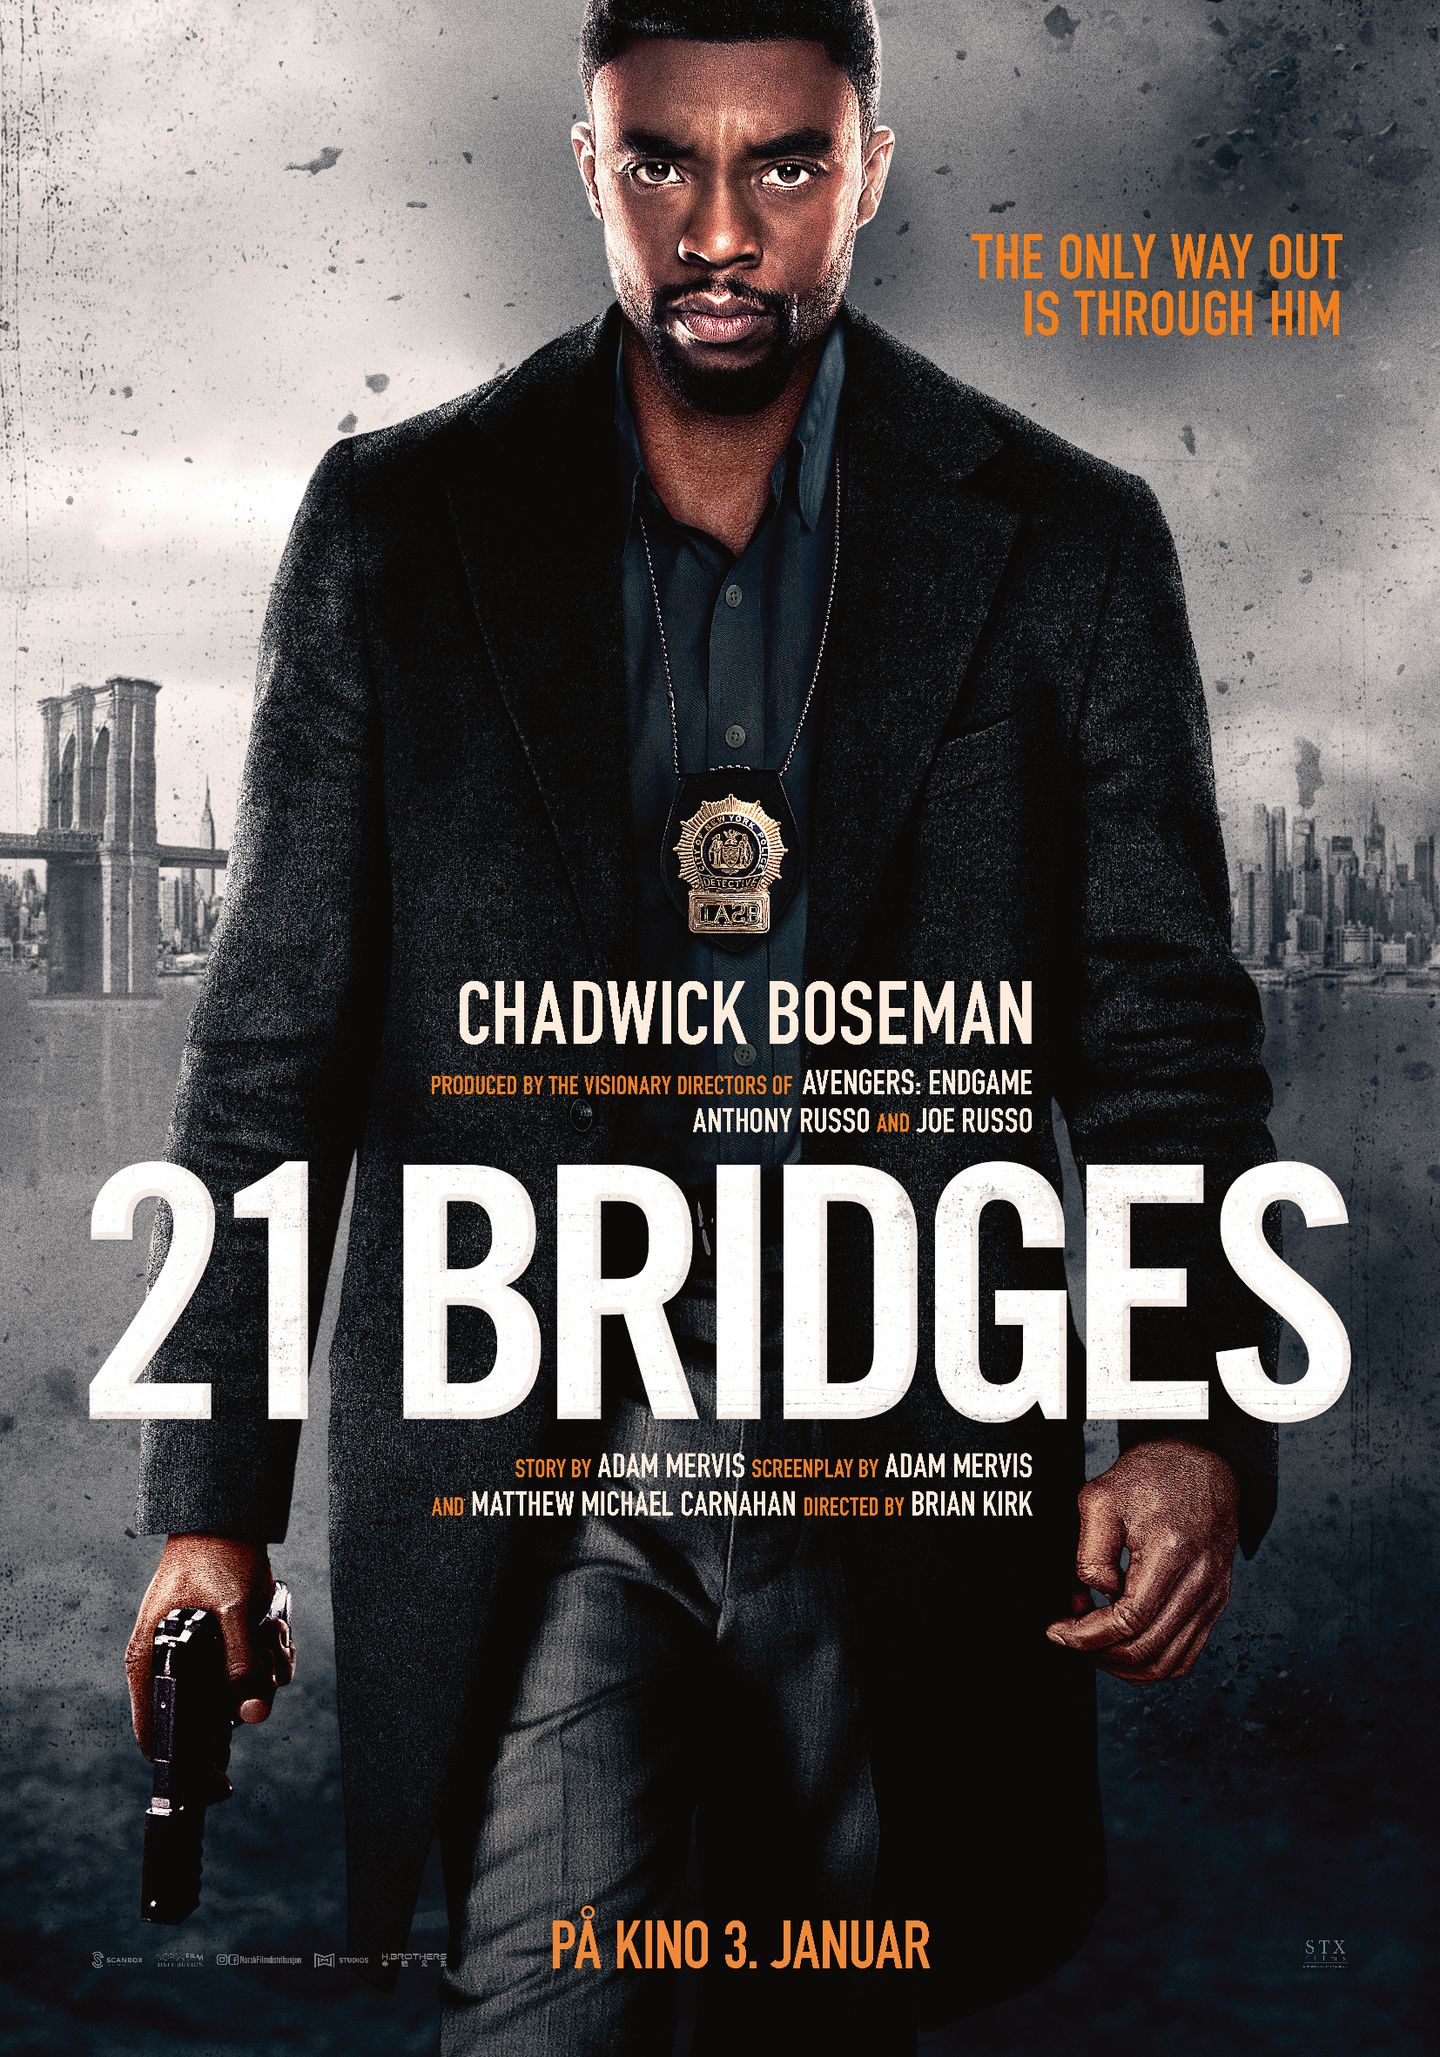 Plakat for '21 Bridges'